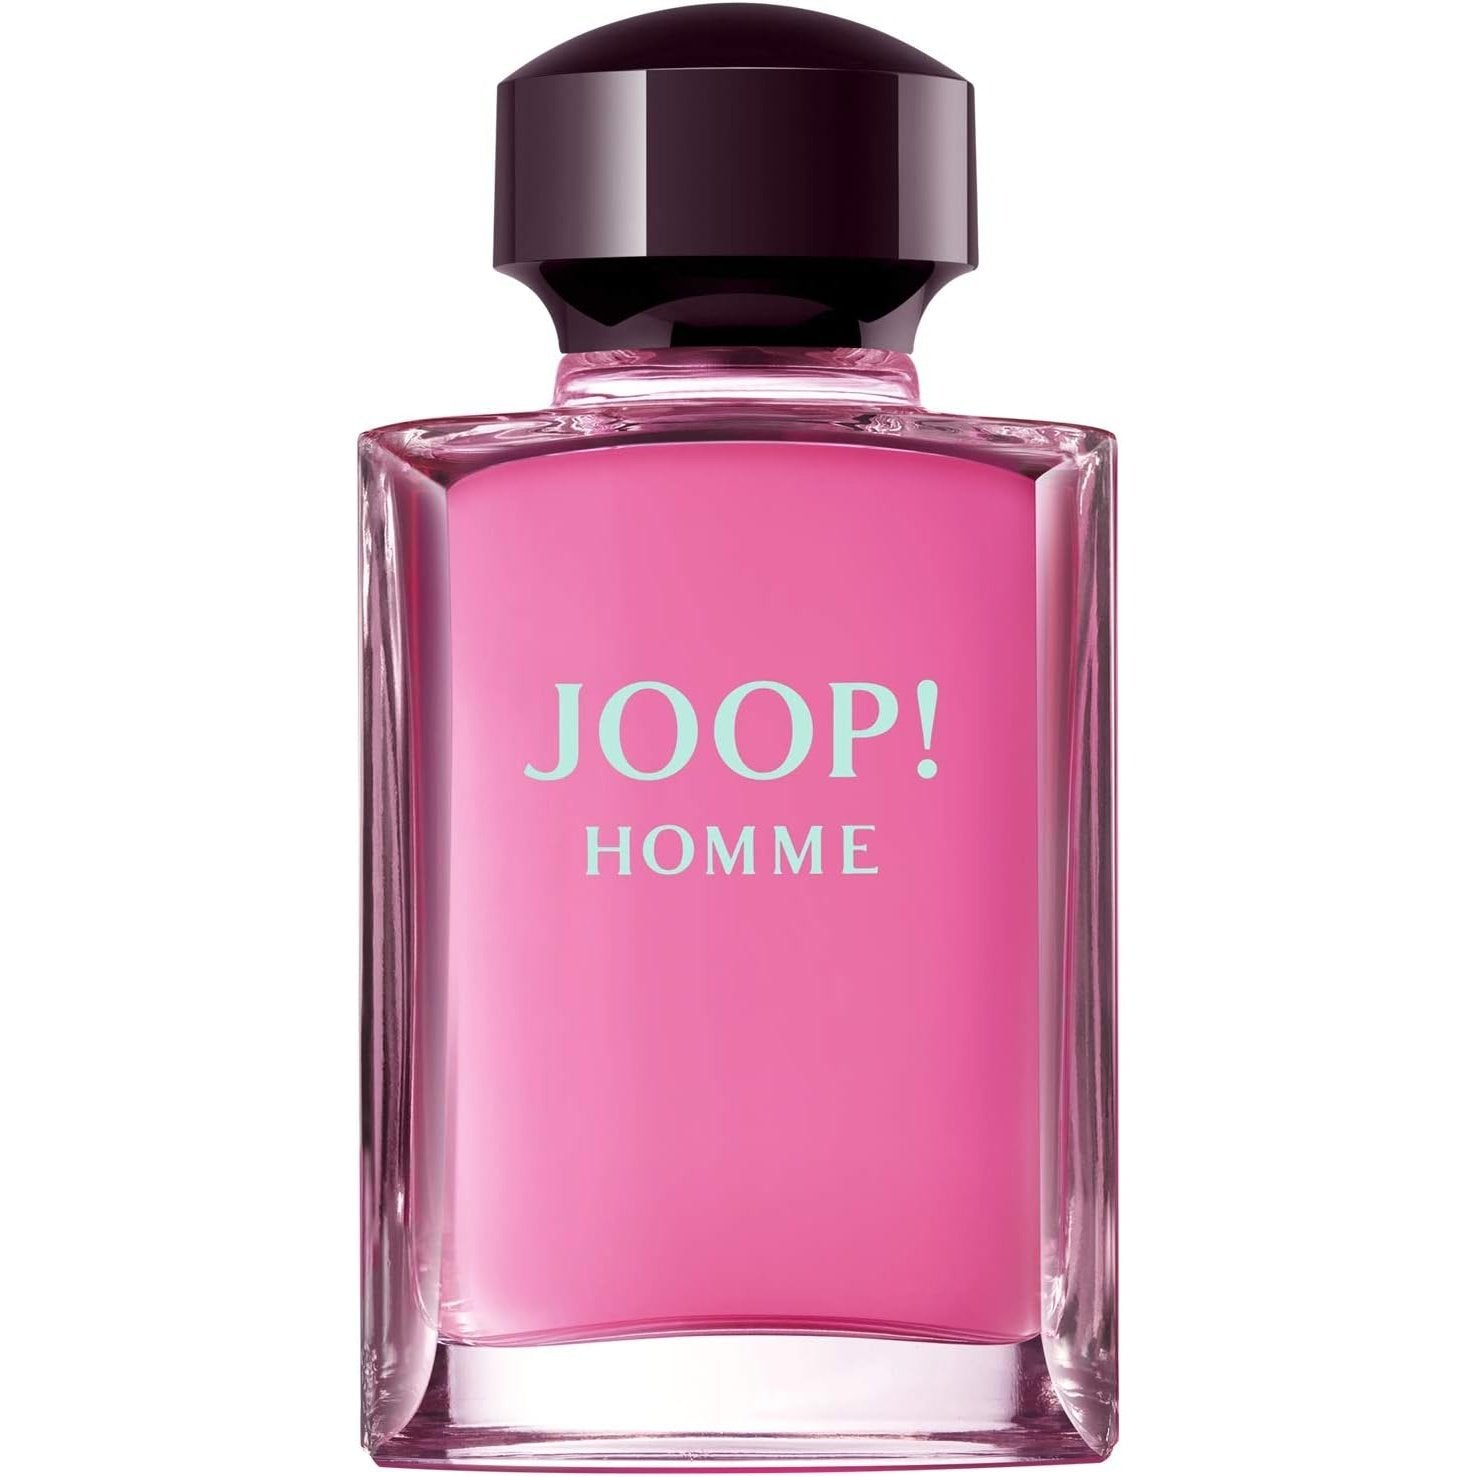 Joop! Homme Aftershave Splash - 75ml